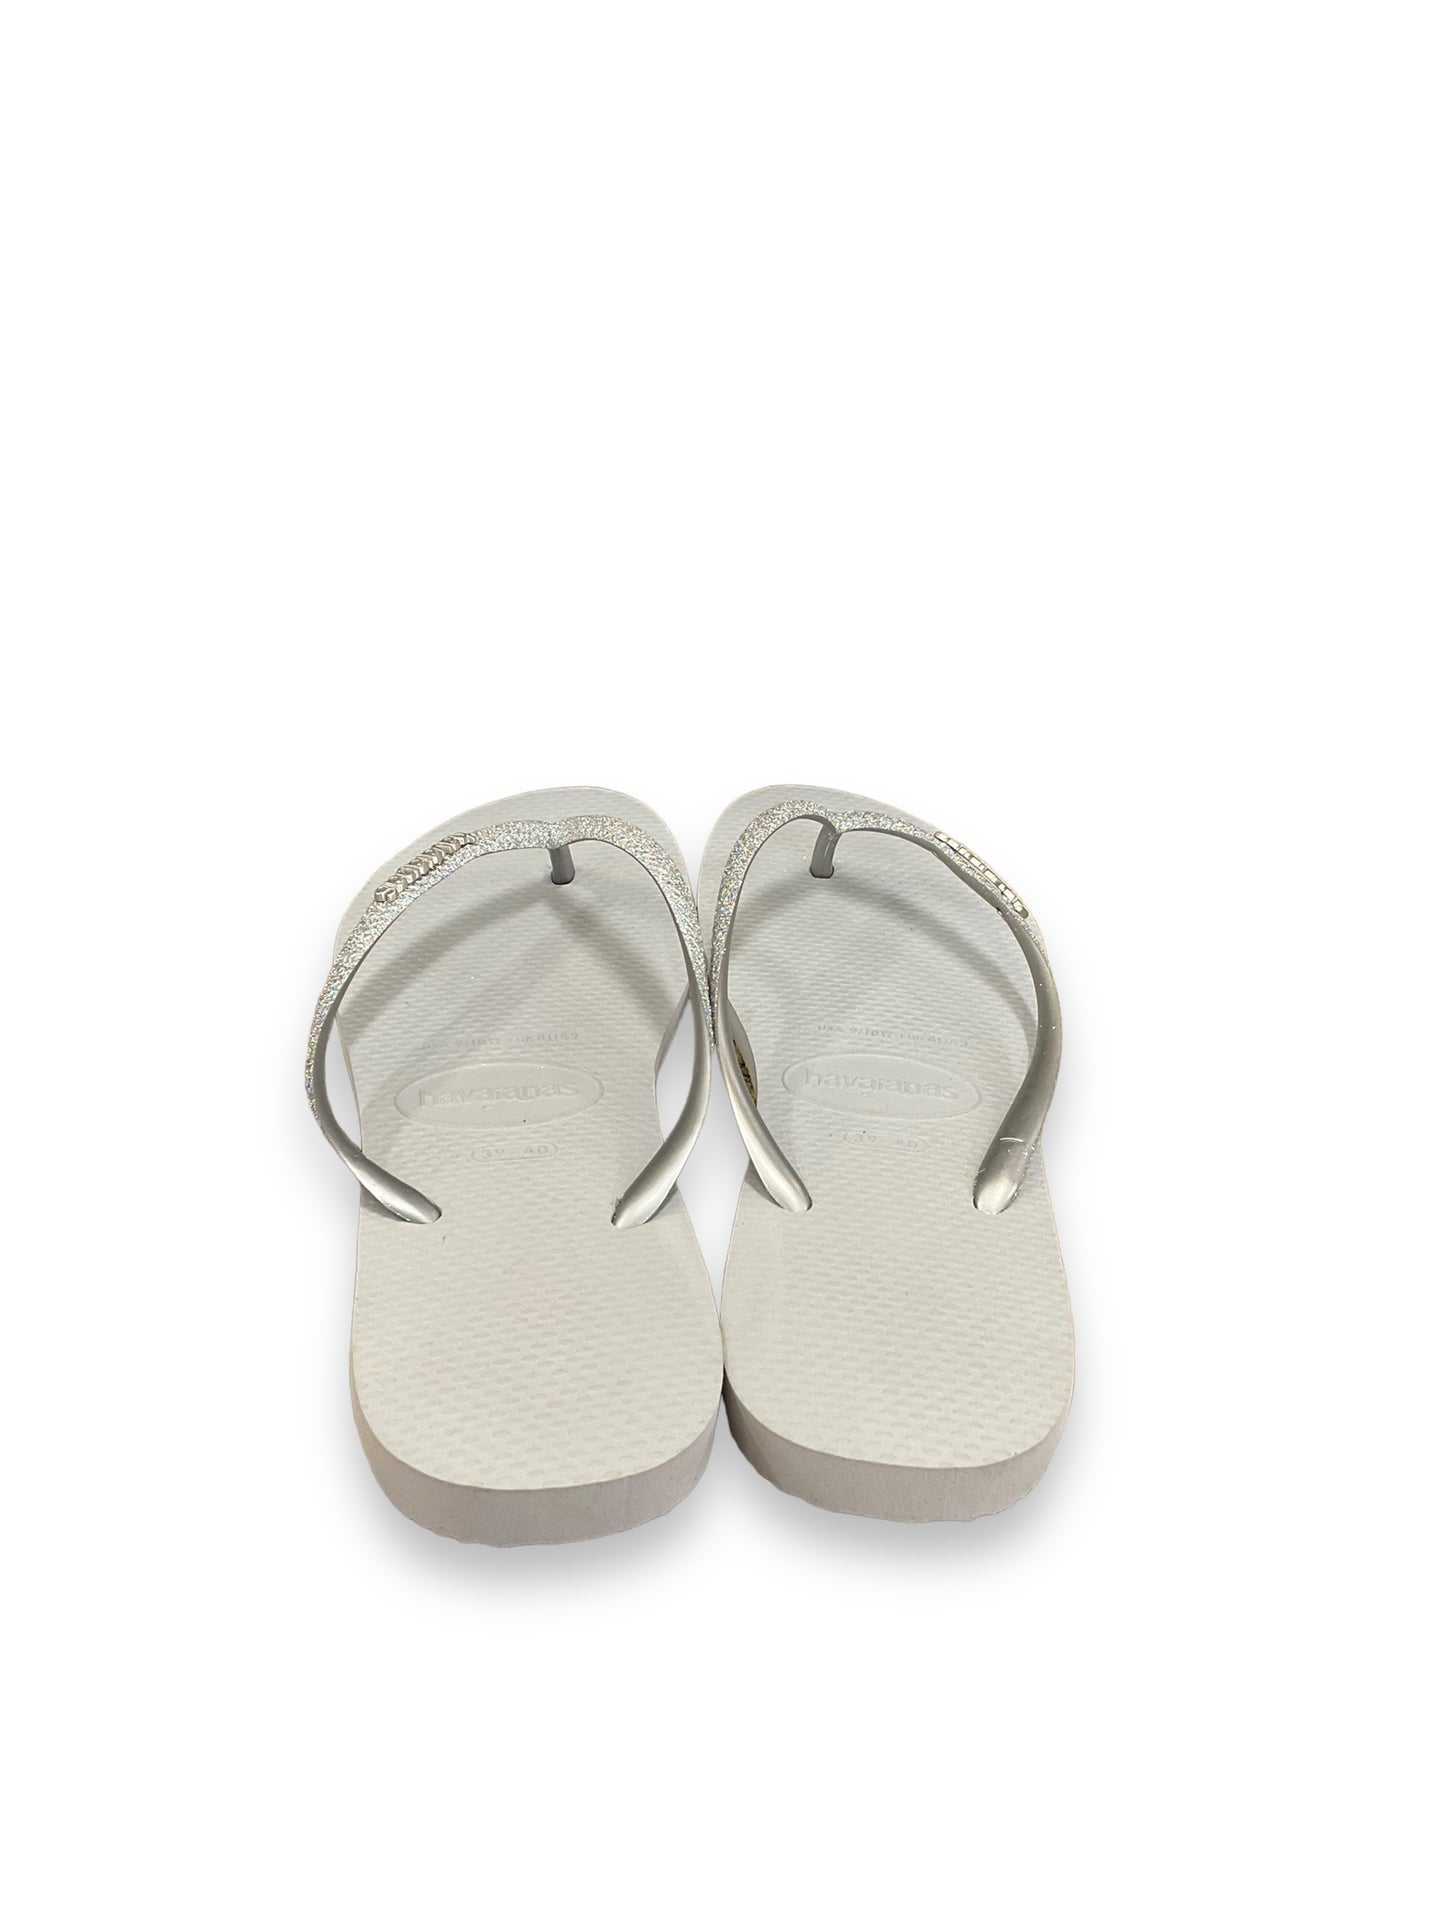 Sandals Flip Flops By Havaianas  Size: 9.5